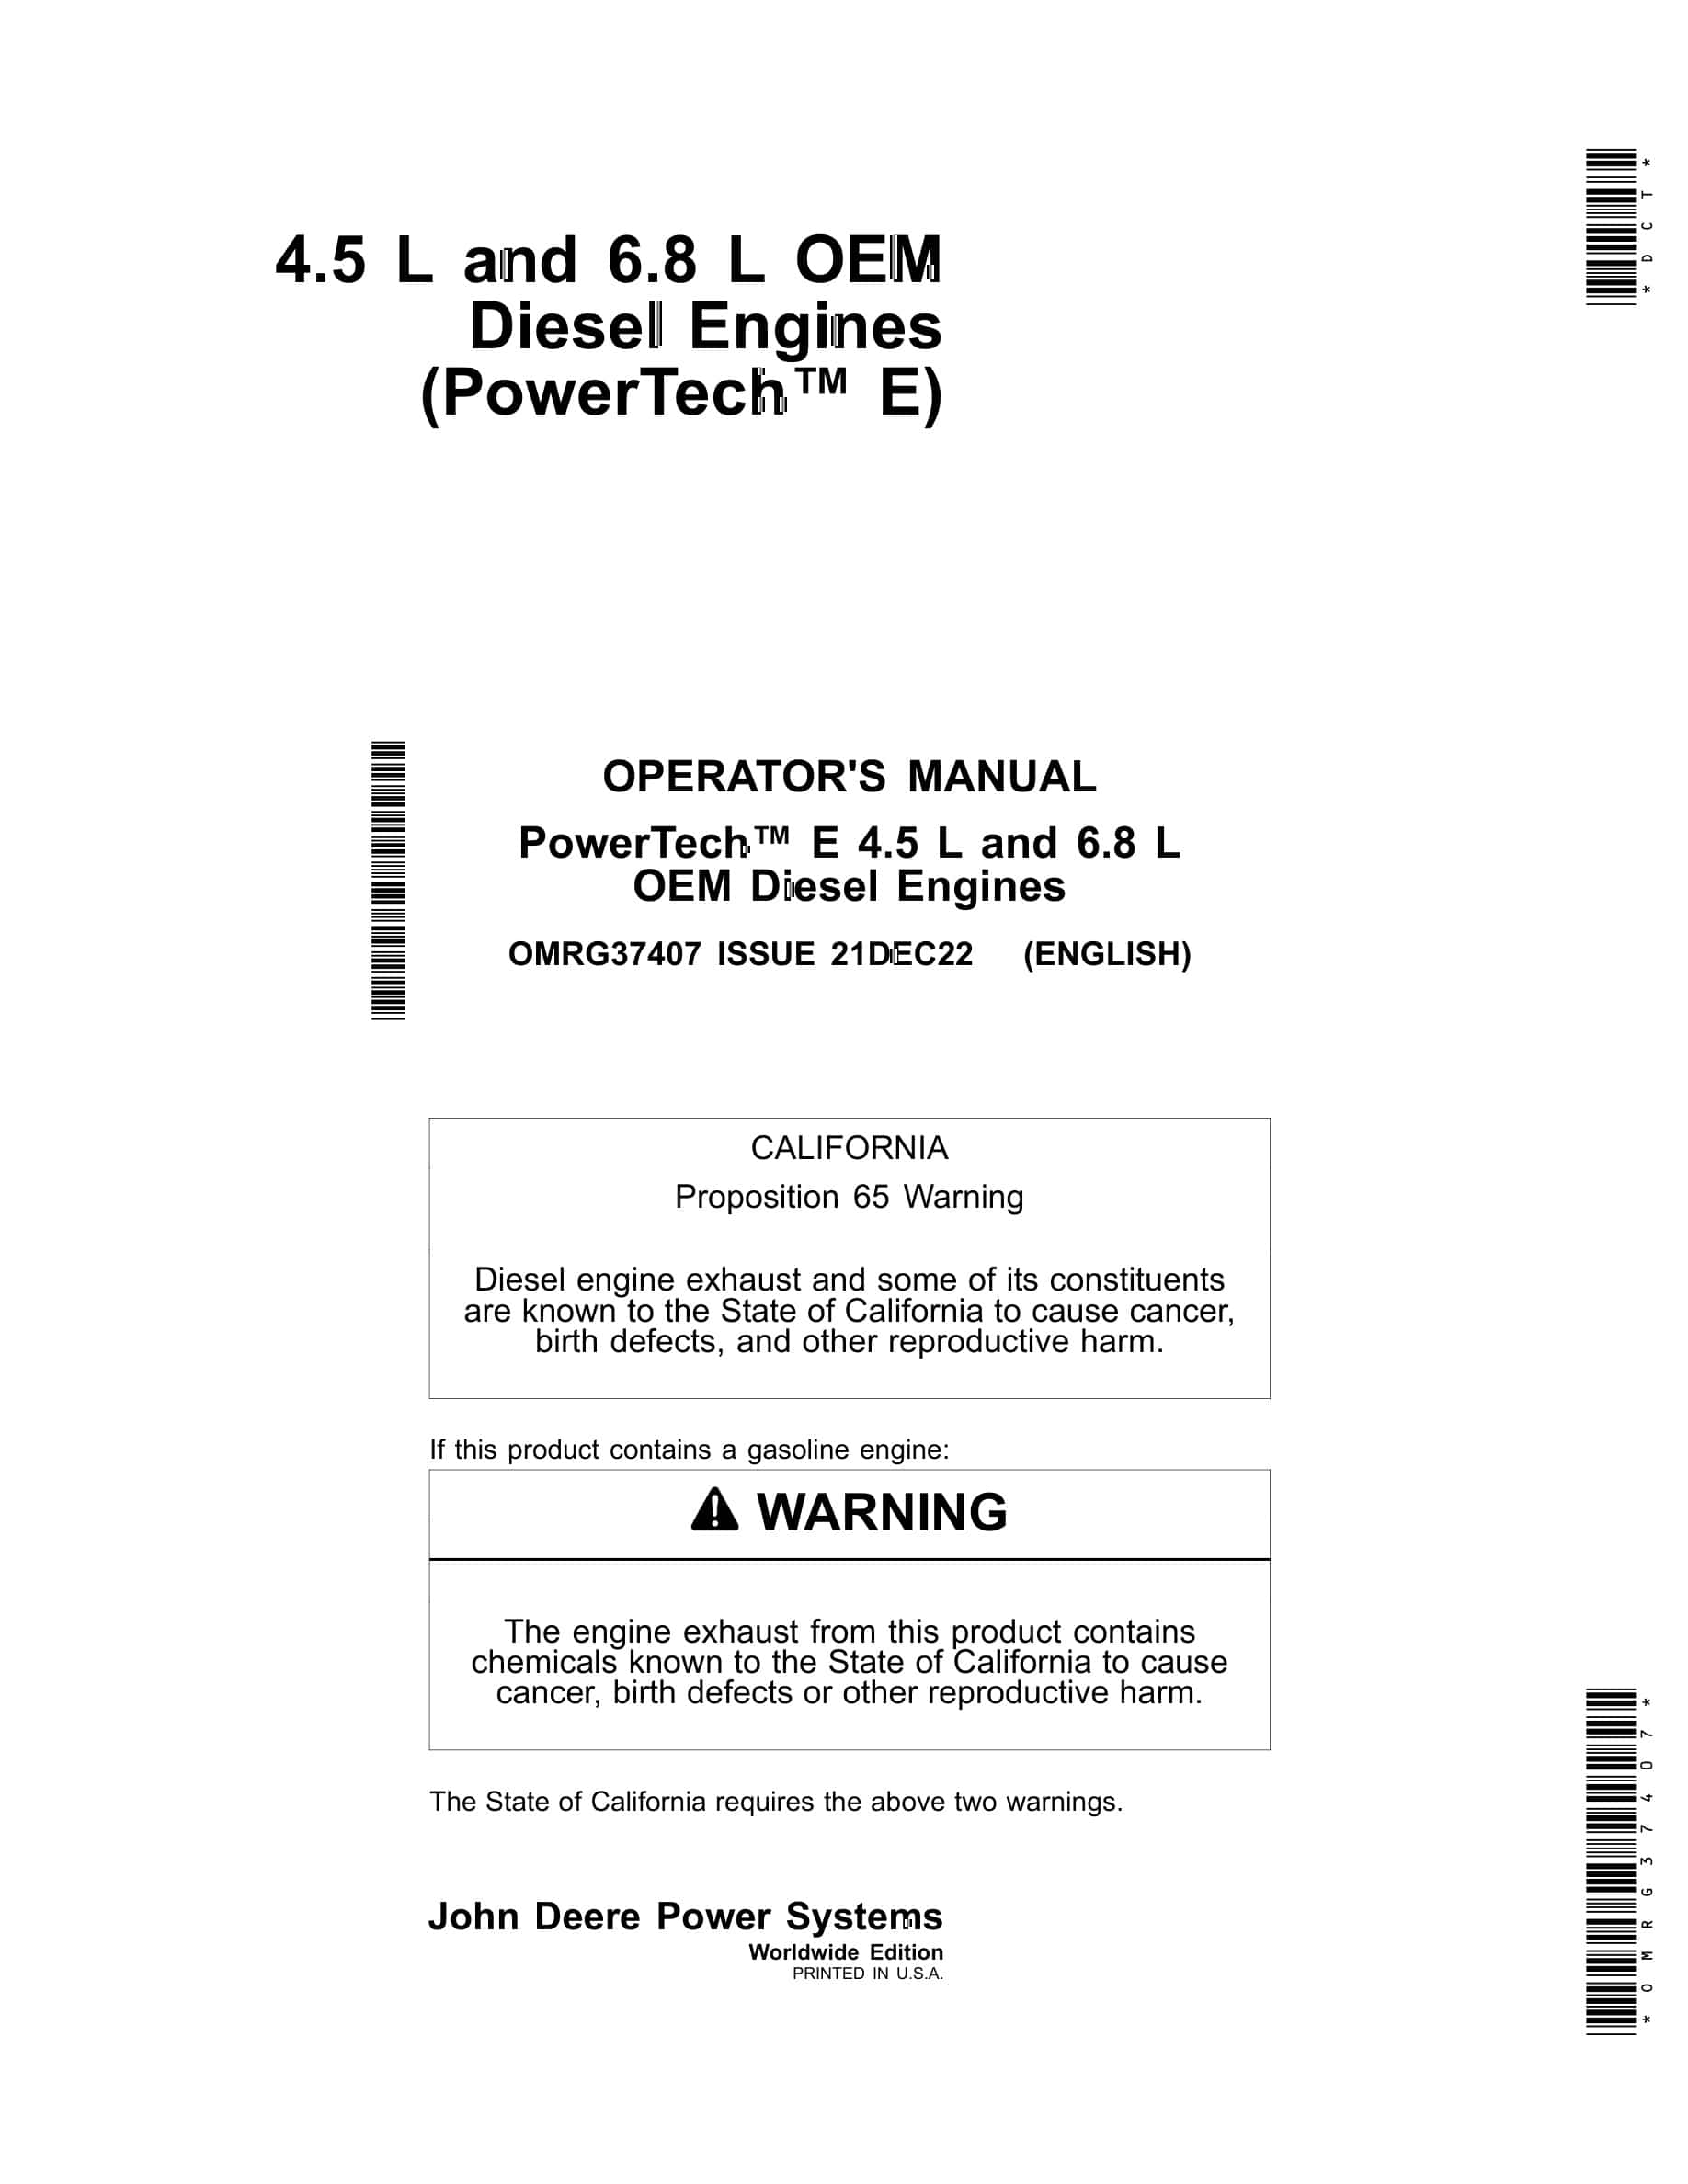 John Deere PowerTech 4.5 L and 6.8 L OEM Diesel Engines Operator Manual OMRG37407-1